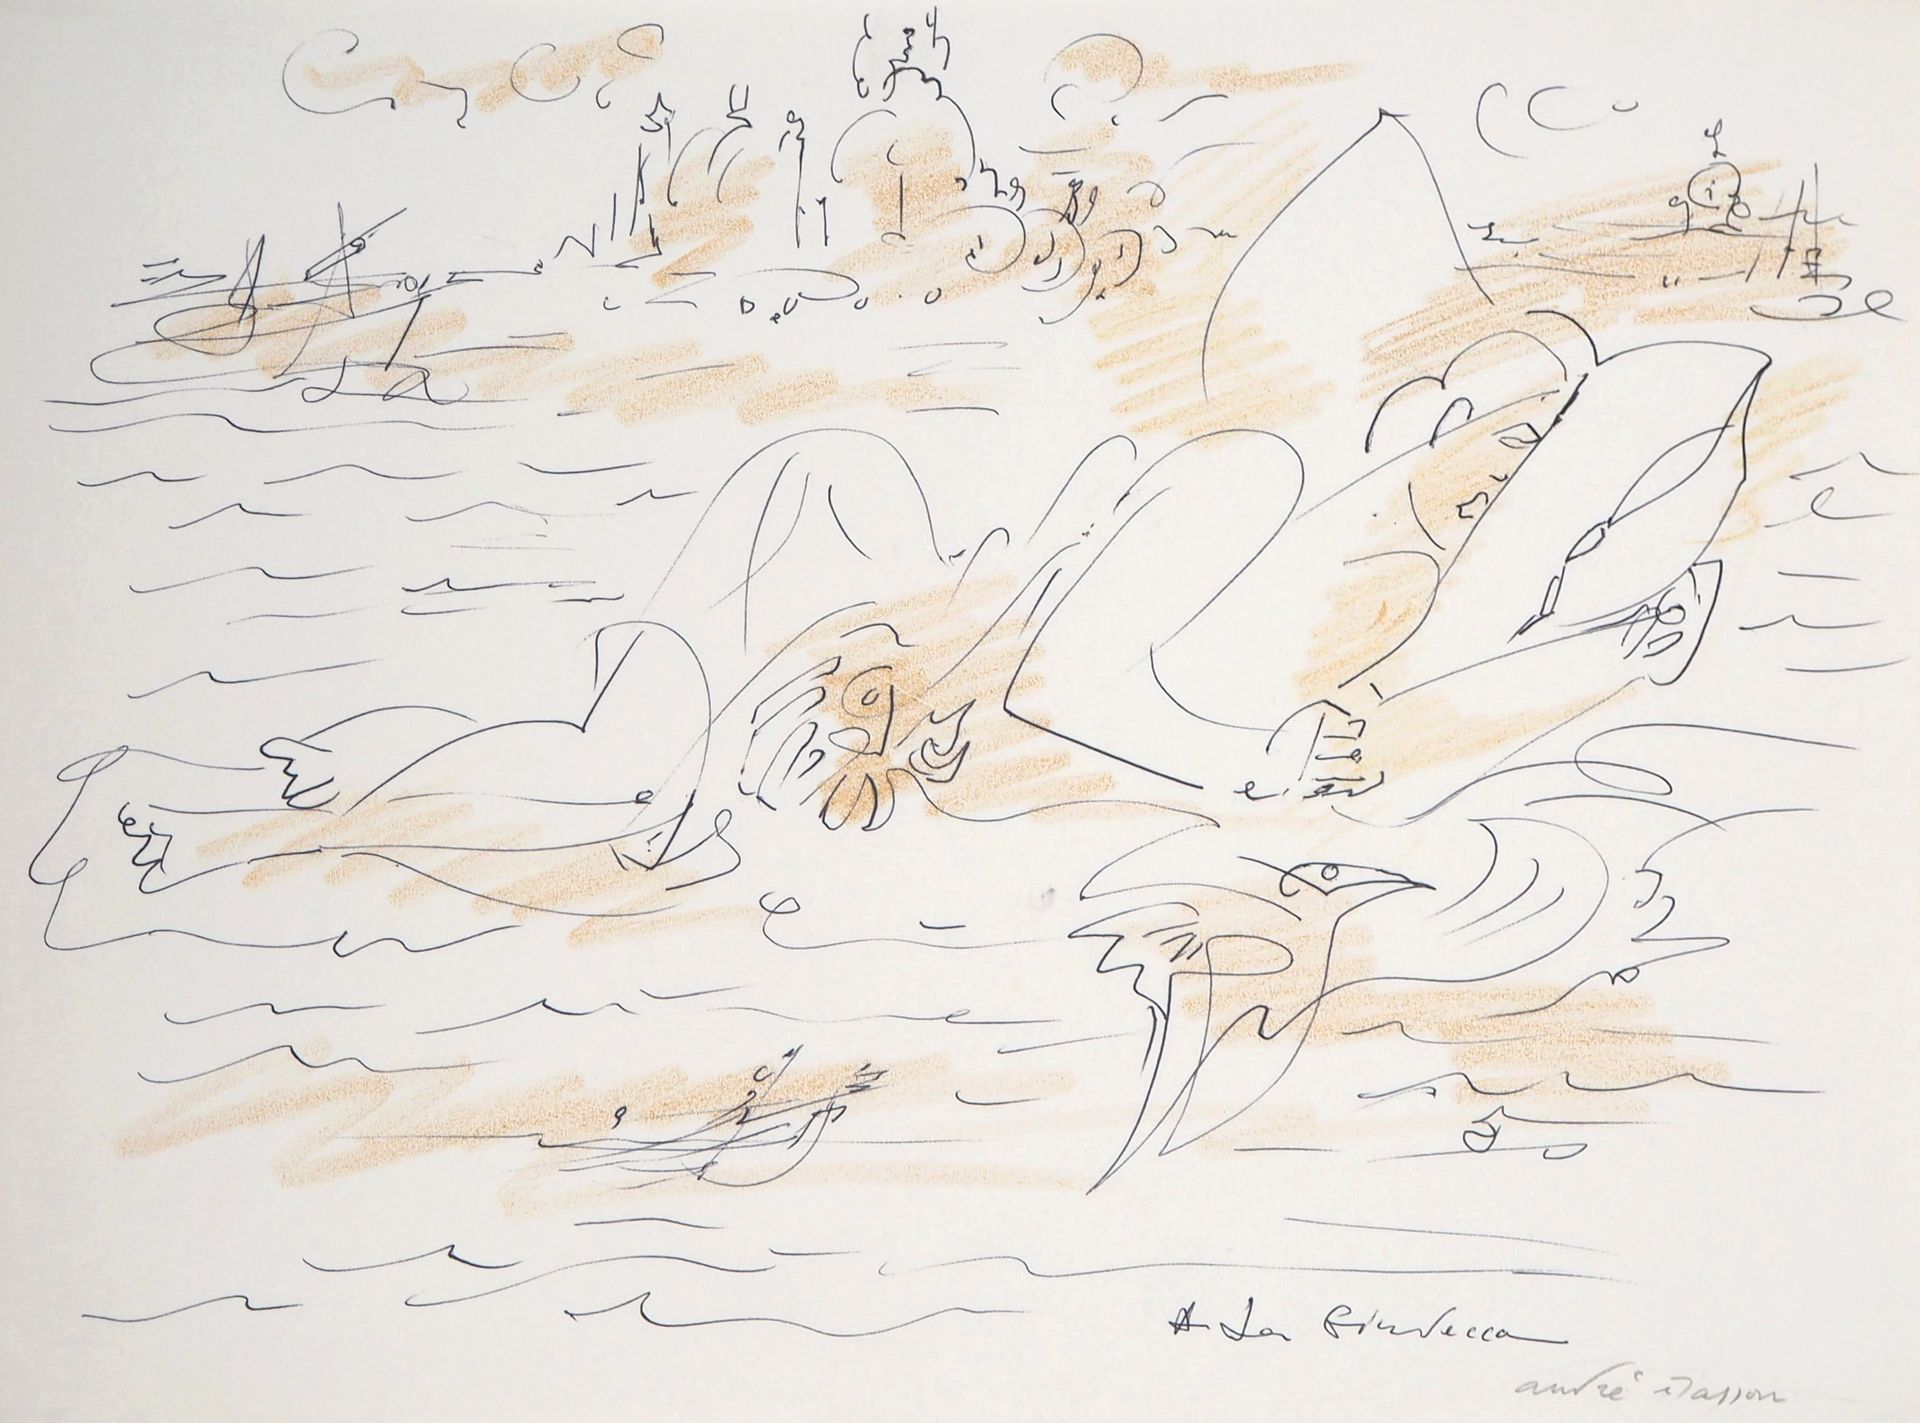 André MASSON André MASSON

在威尼斯的Giudecca（泻湖上的裸体）。

水墨原画，用粉彩加强

用铅笔签名

纸上，26.5 x &hellip;